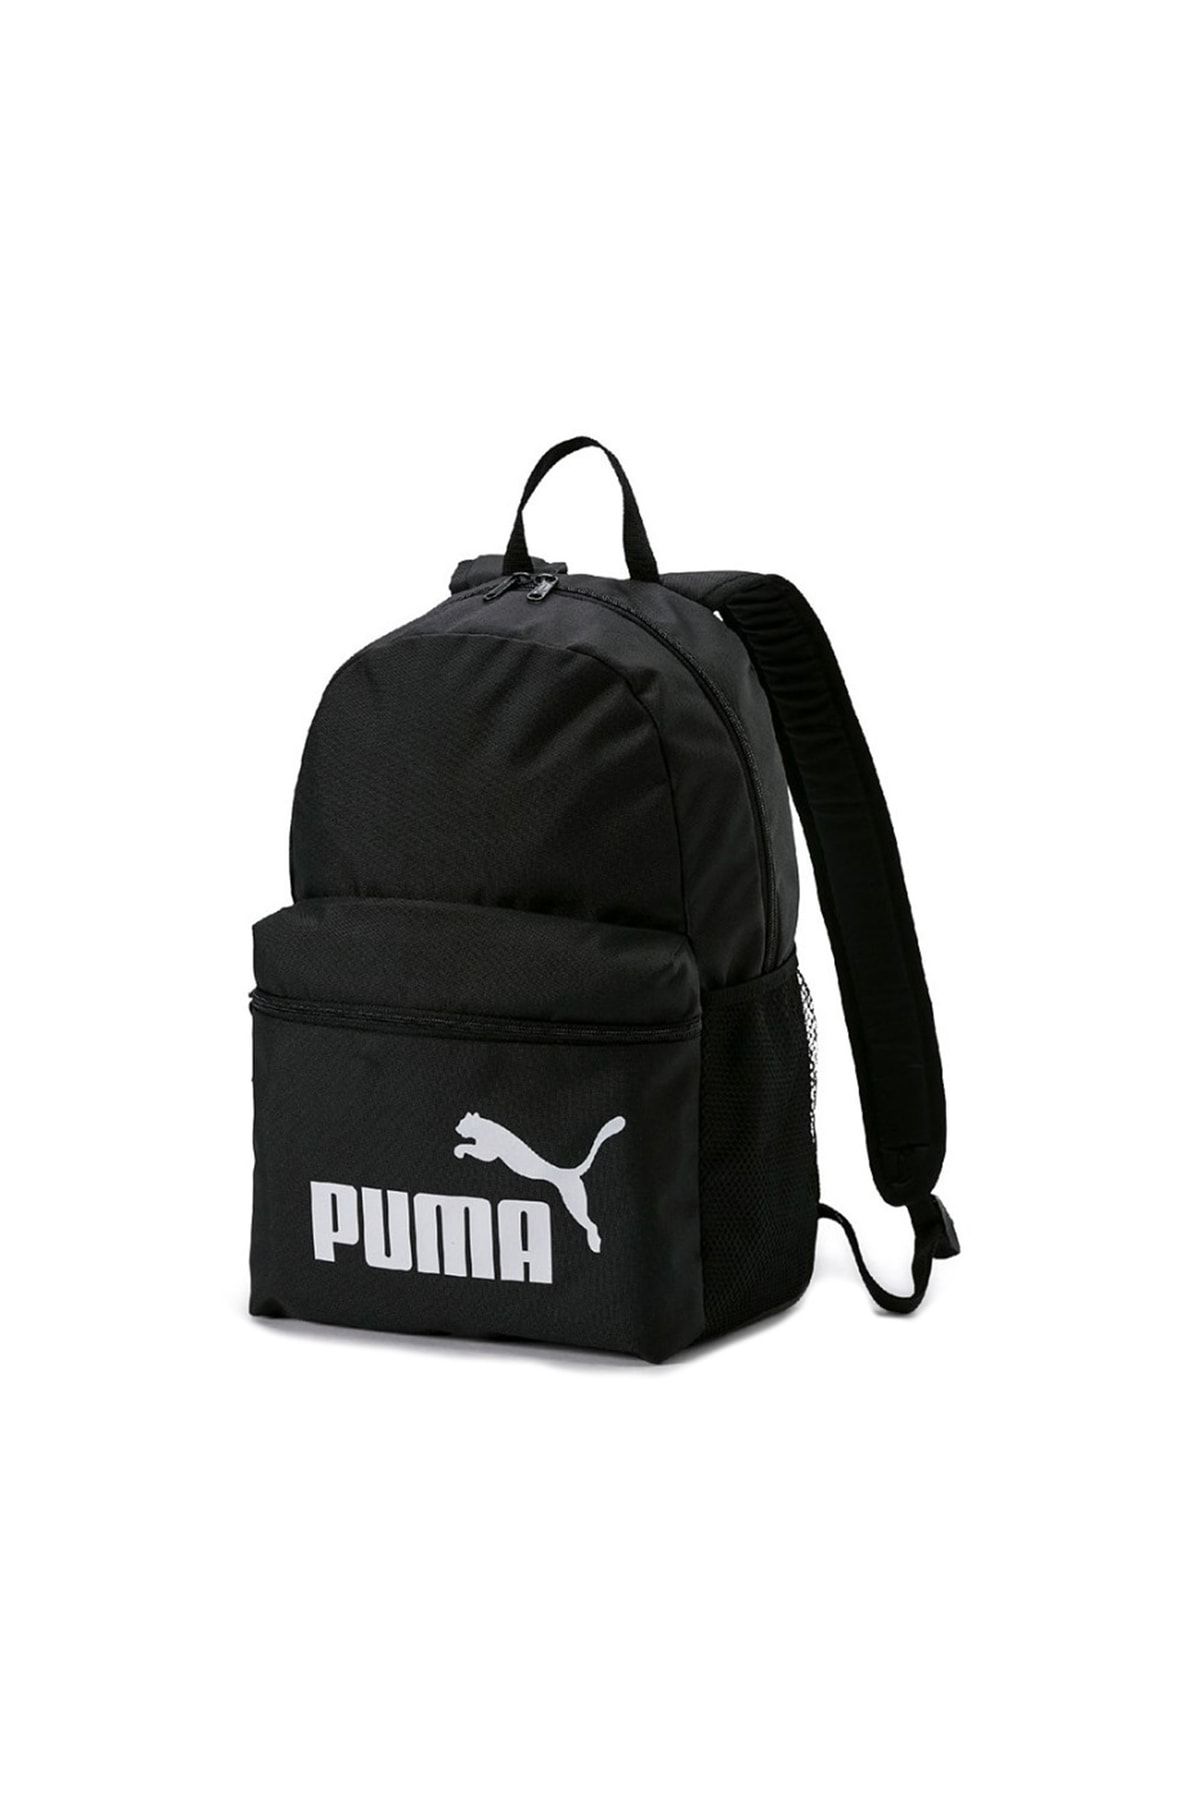 Puma Phase Backpack Sırt Çantası 7548701 Siyah